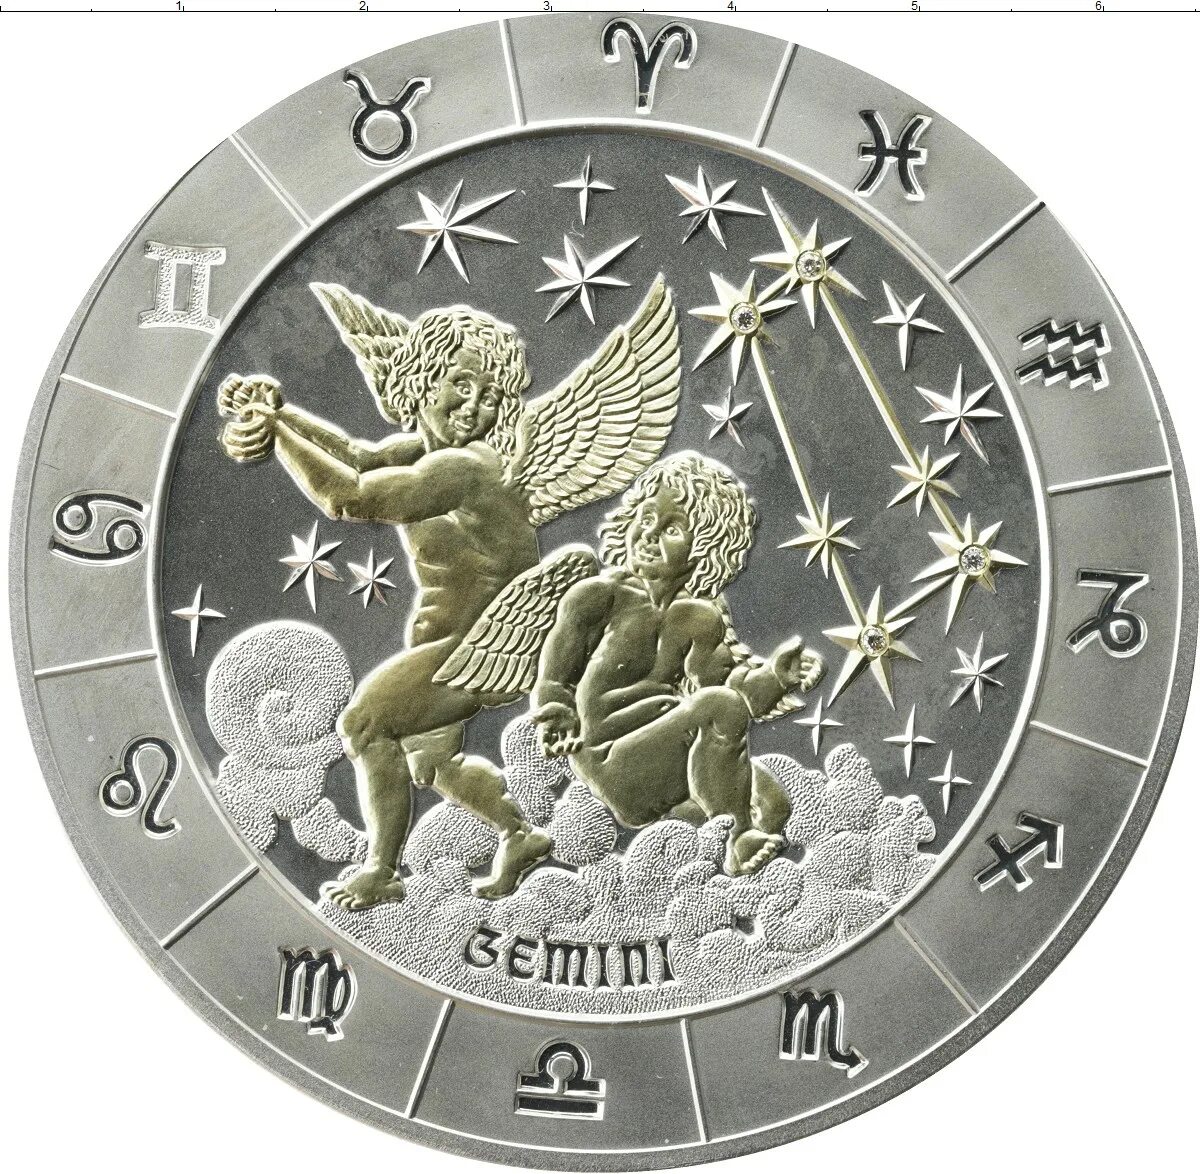 Монета знак зодиака купить. Монета 2009 Руанда 1000 франков (Francs) 2009 "знаки зодиака - Водолей". Монета 1000 руандских франков серебро. Монета 1000 франков Руанда. Монеты РСХБ серебро серебро знаки зодиака.